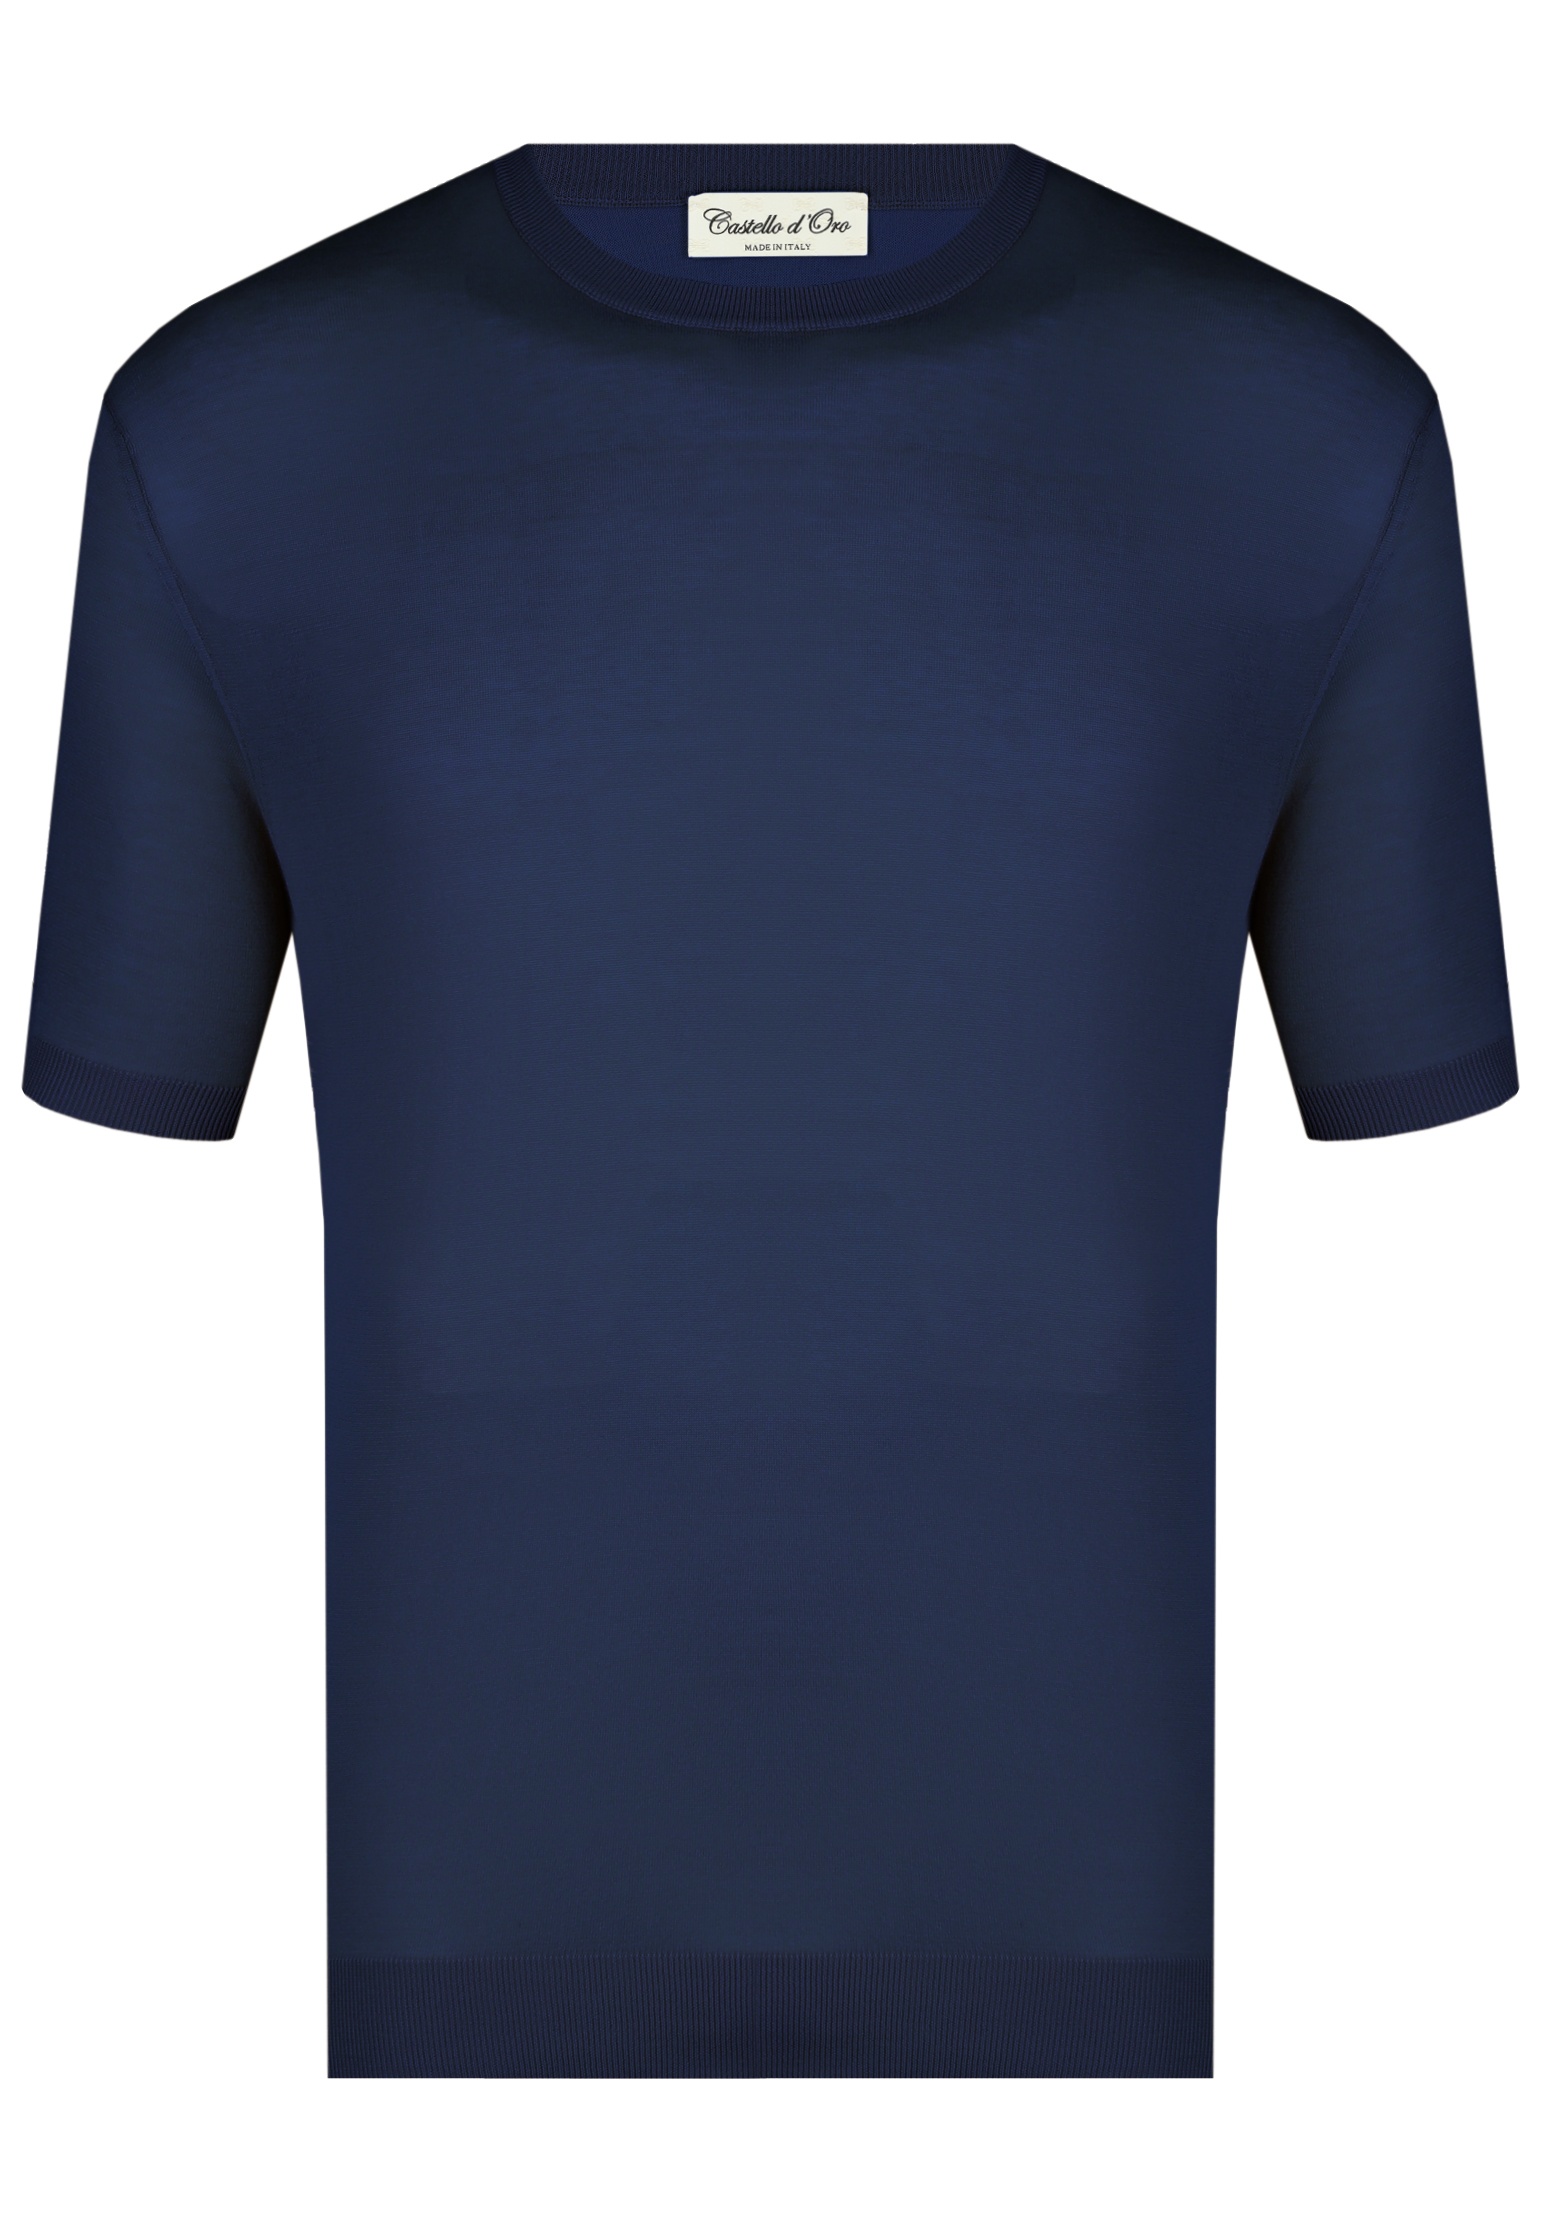 мужская футболка castello d’oro, синяя